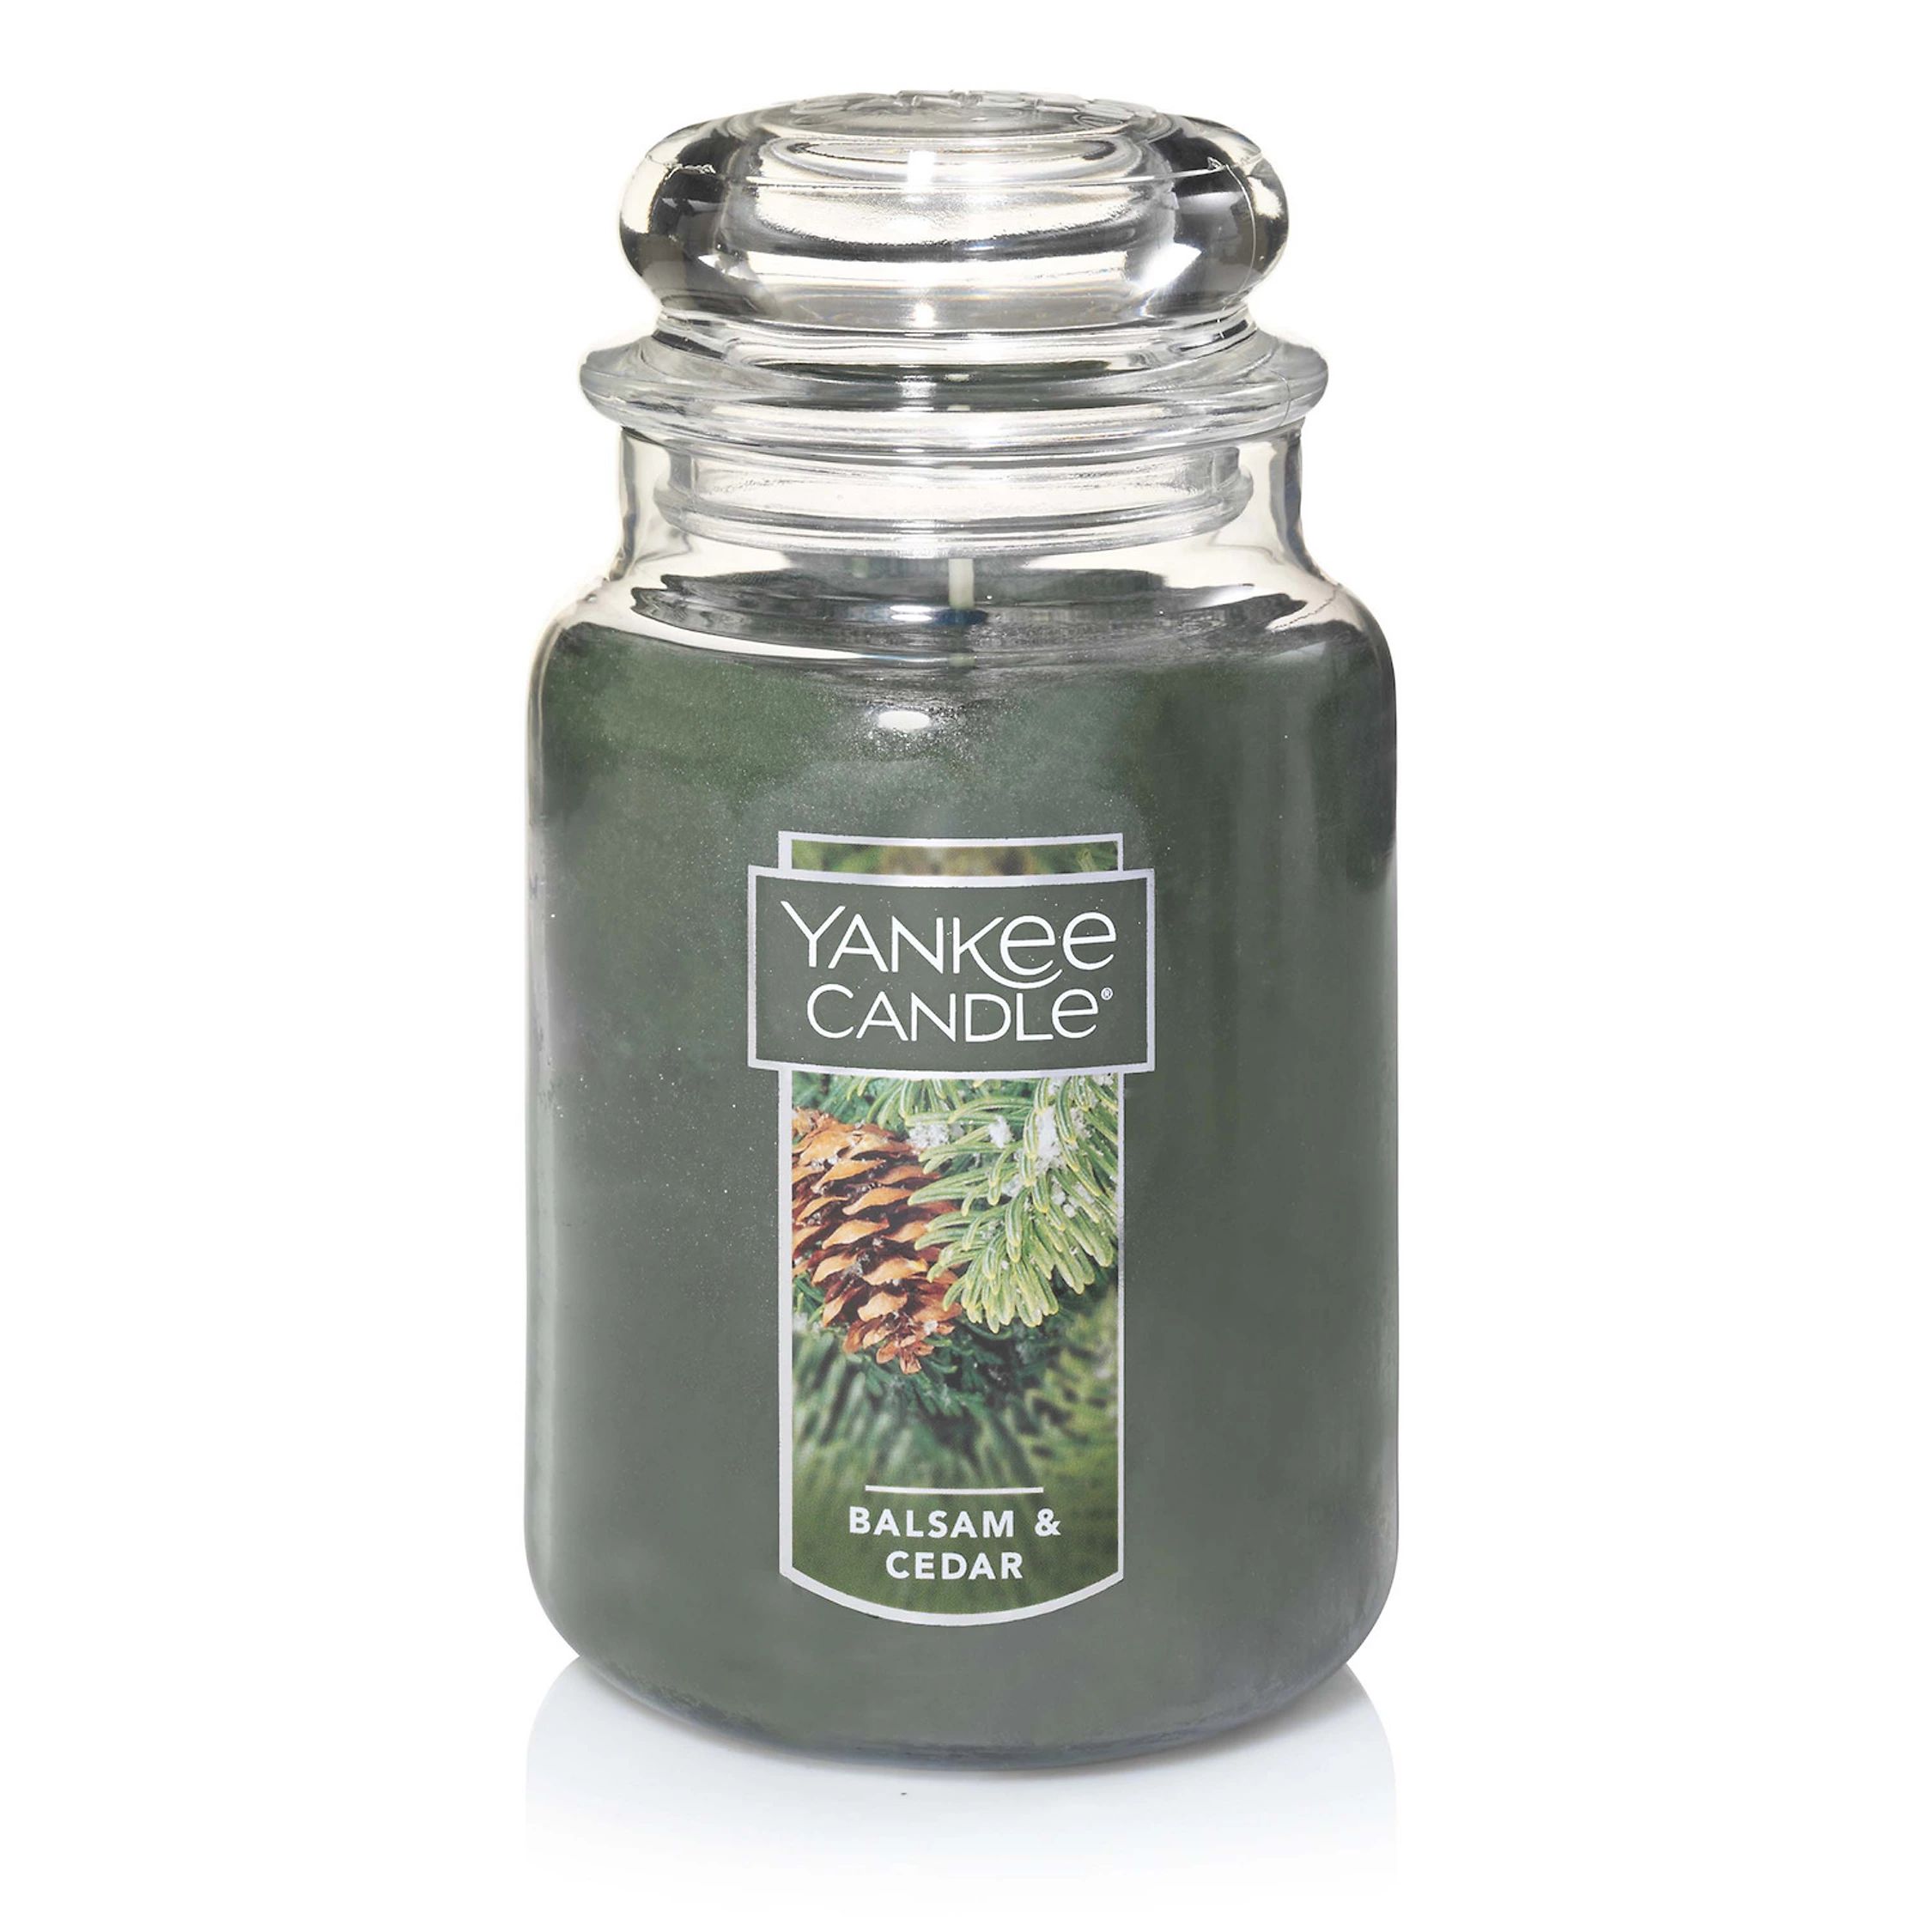 Yankee Candle Balsam & Cedar 22-oz. Large Candle Jar | Kohl's